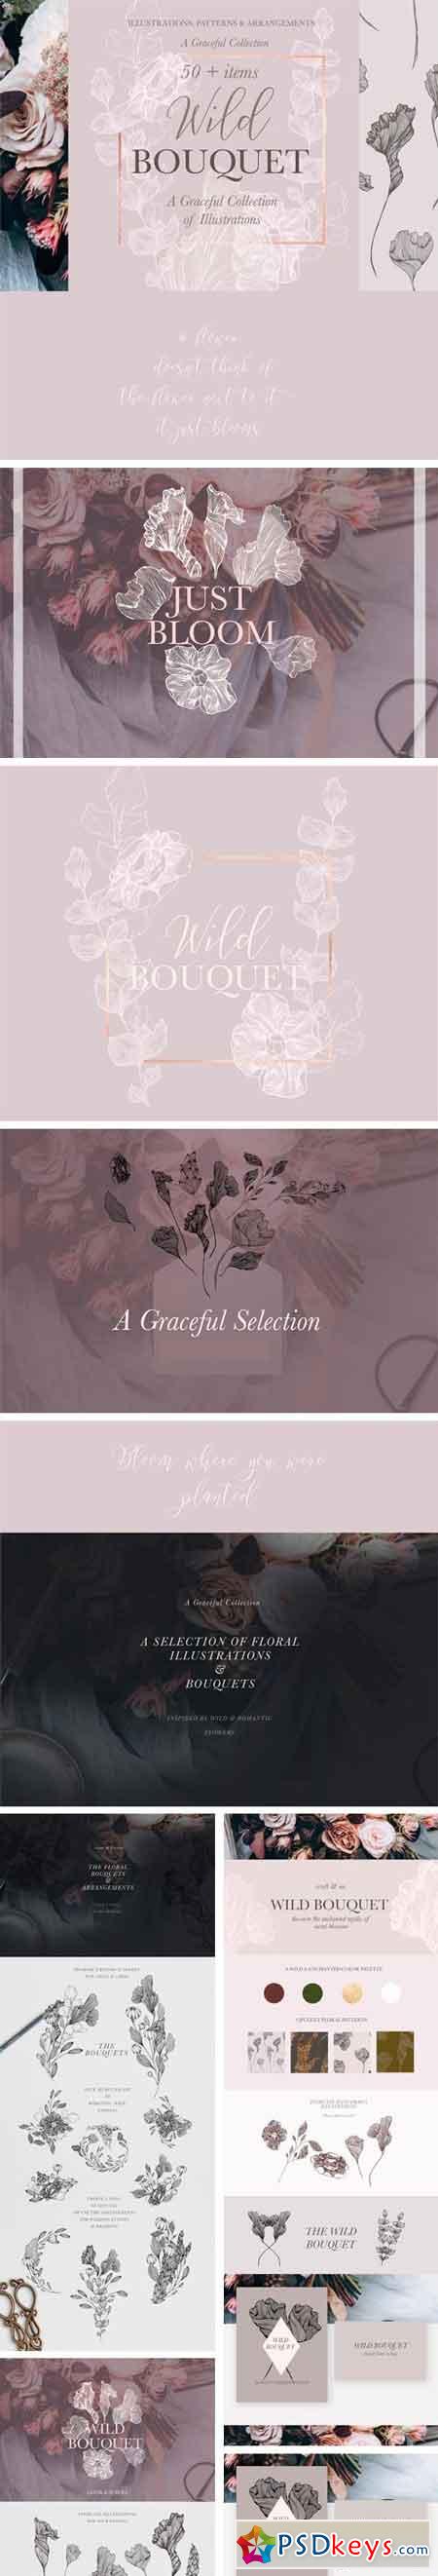 Wild Bouquet Wedding Illustrations 2270011